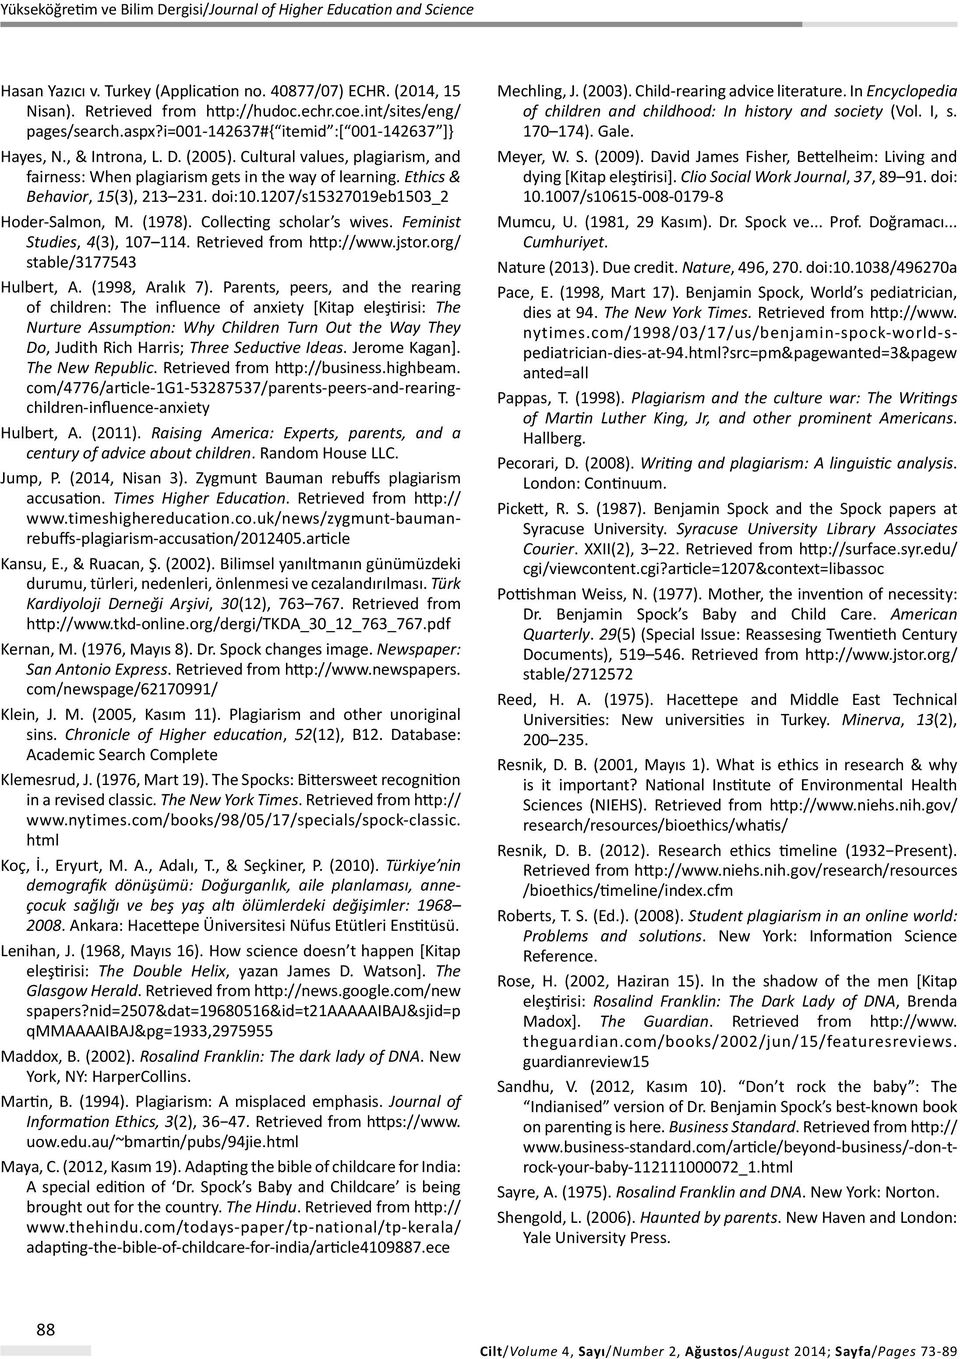 (1978). Collecting scholar s wives. Feminist Studies, 4(3), 107 114. Retrieved from http://www.jstor.org/ stable/3177543 Hulbert, A. (1998, Aralık 7).